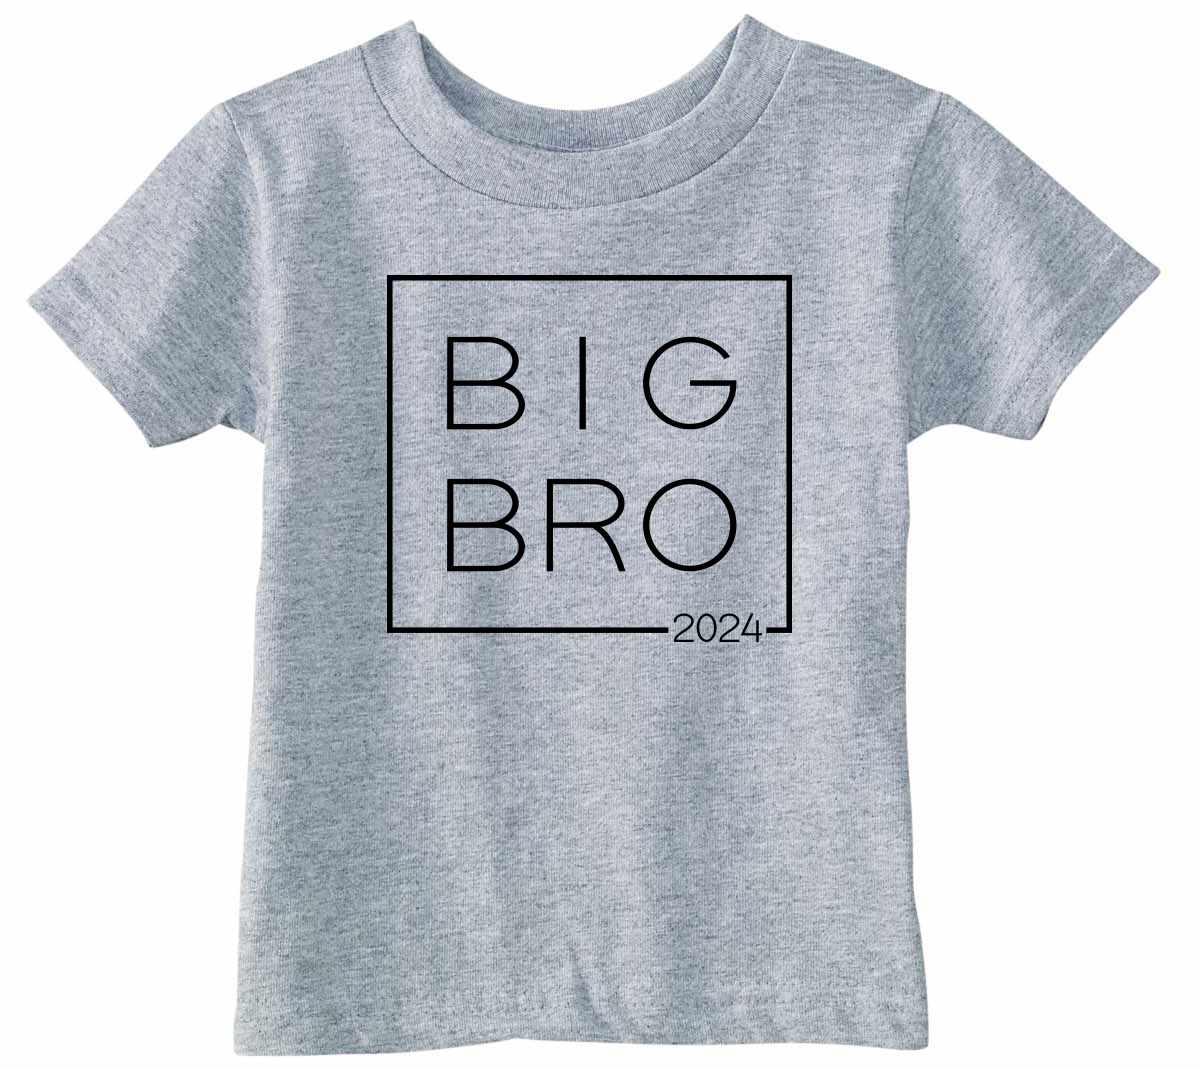 Big Bro 2024 - Big Brother Box on Infant-Toddler T-Shirt (#1353-7)